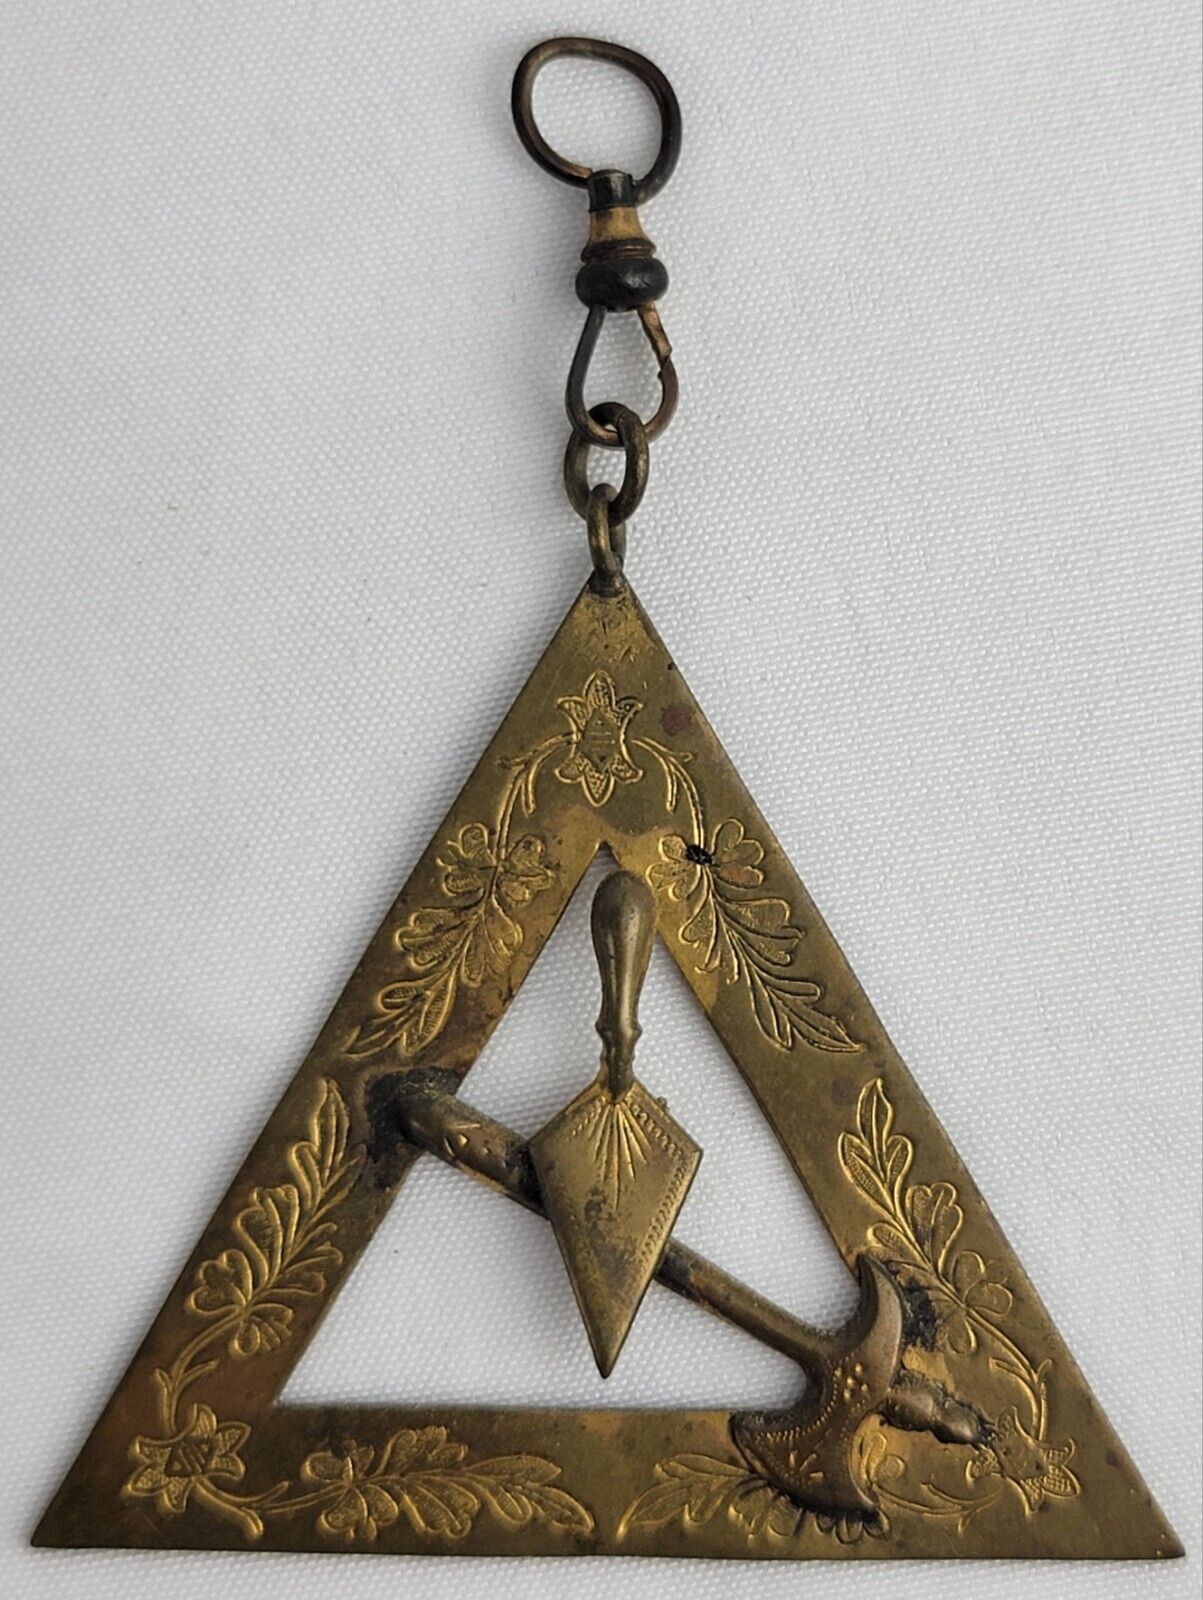 Rare Antique Masonic Mason's Ornate Fob